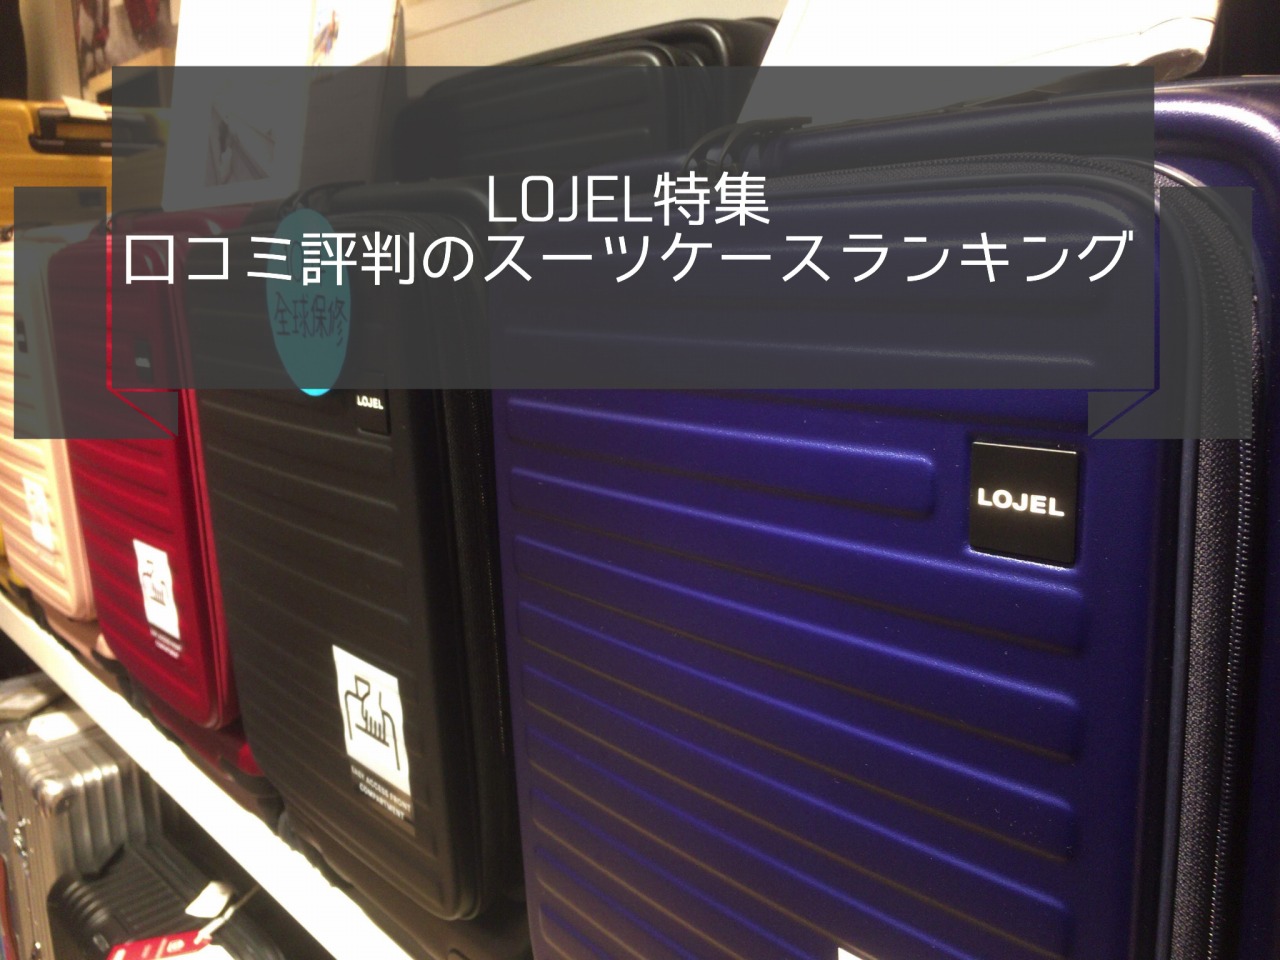 LOJEL/ロジェールの魅力とは｜口コミ評判のスーツケース5選ランキング